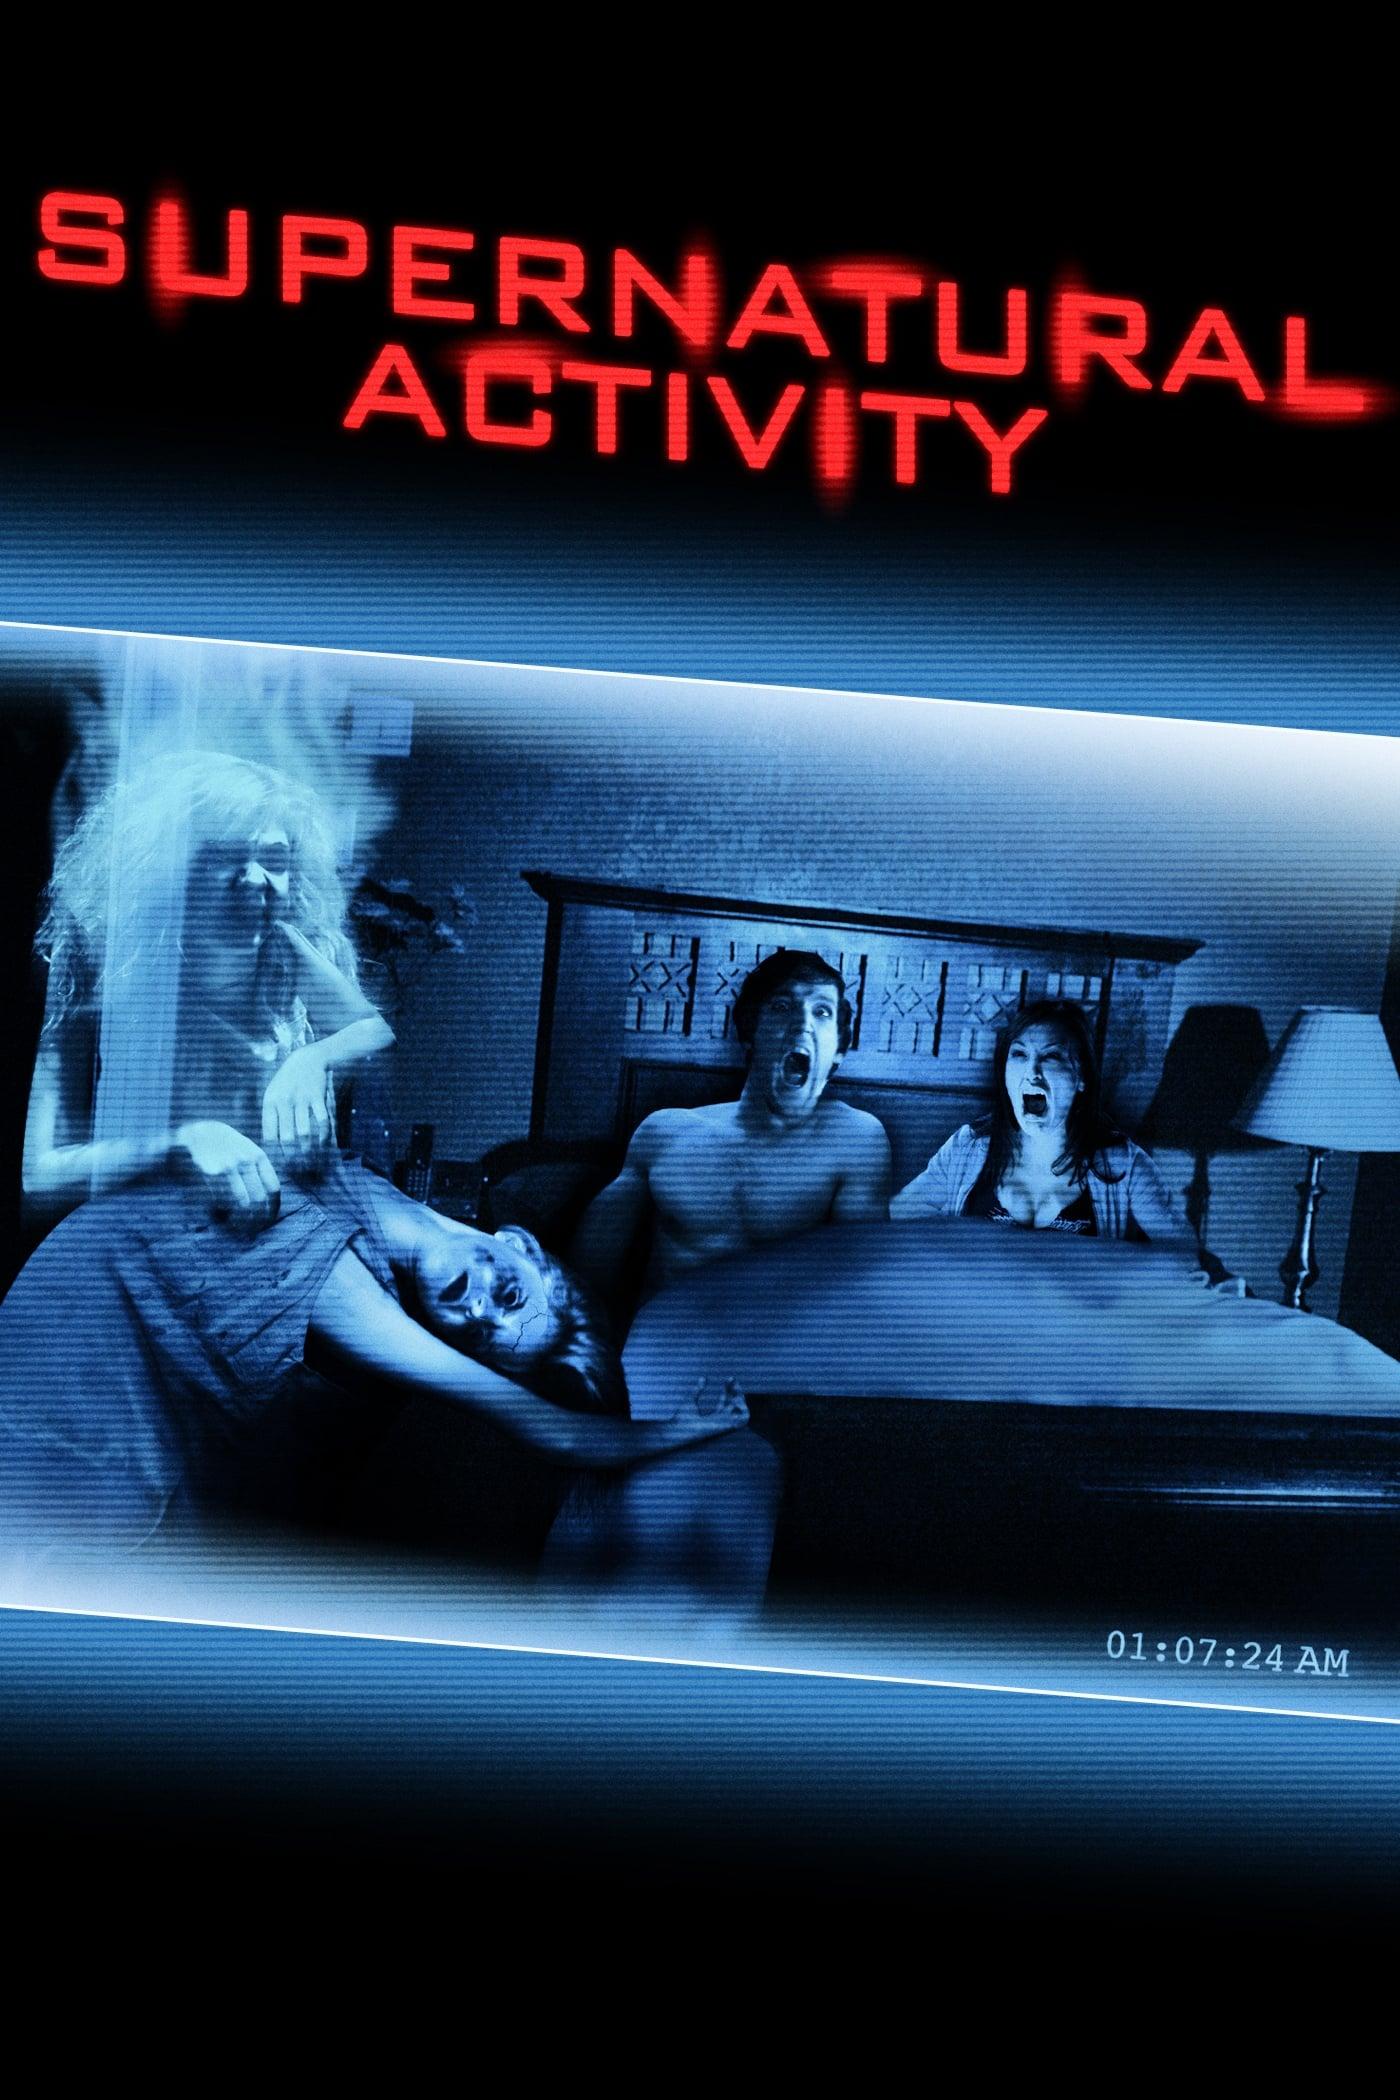 Supernatural Activity poster